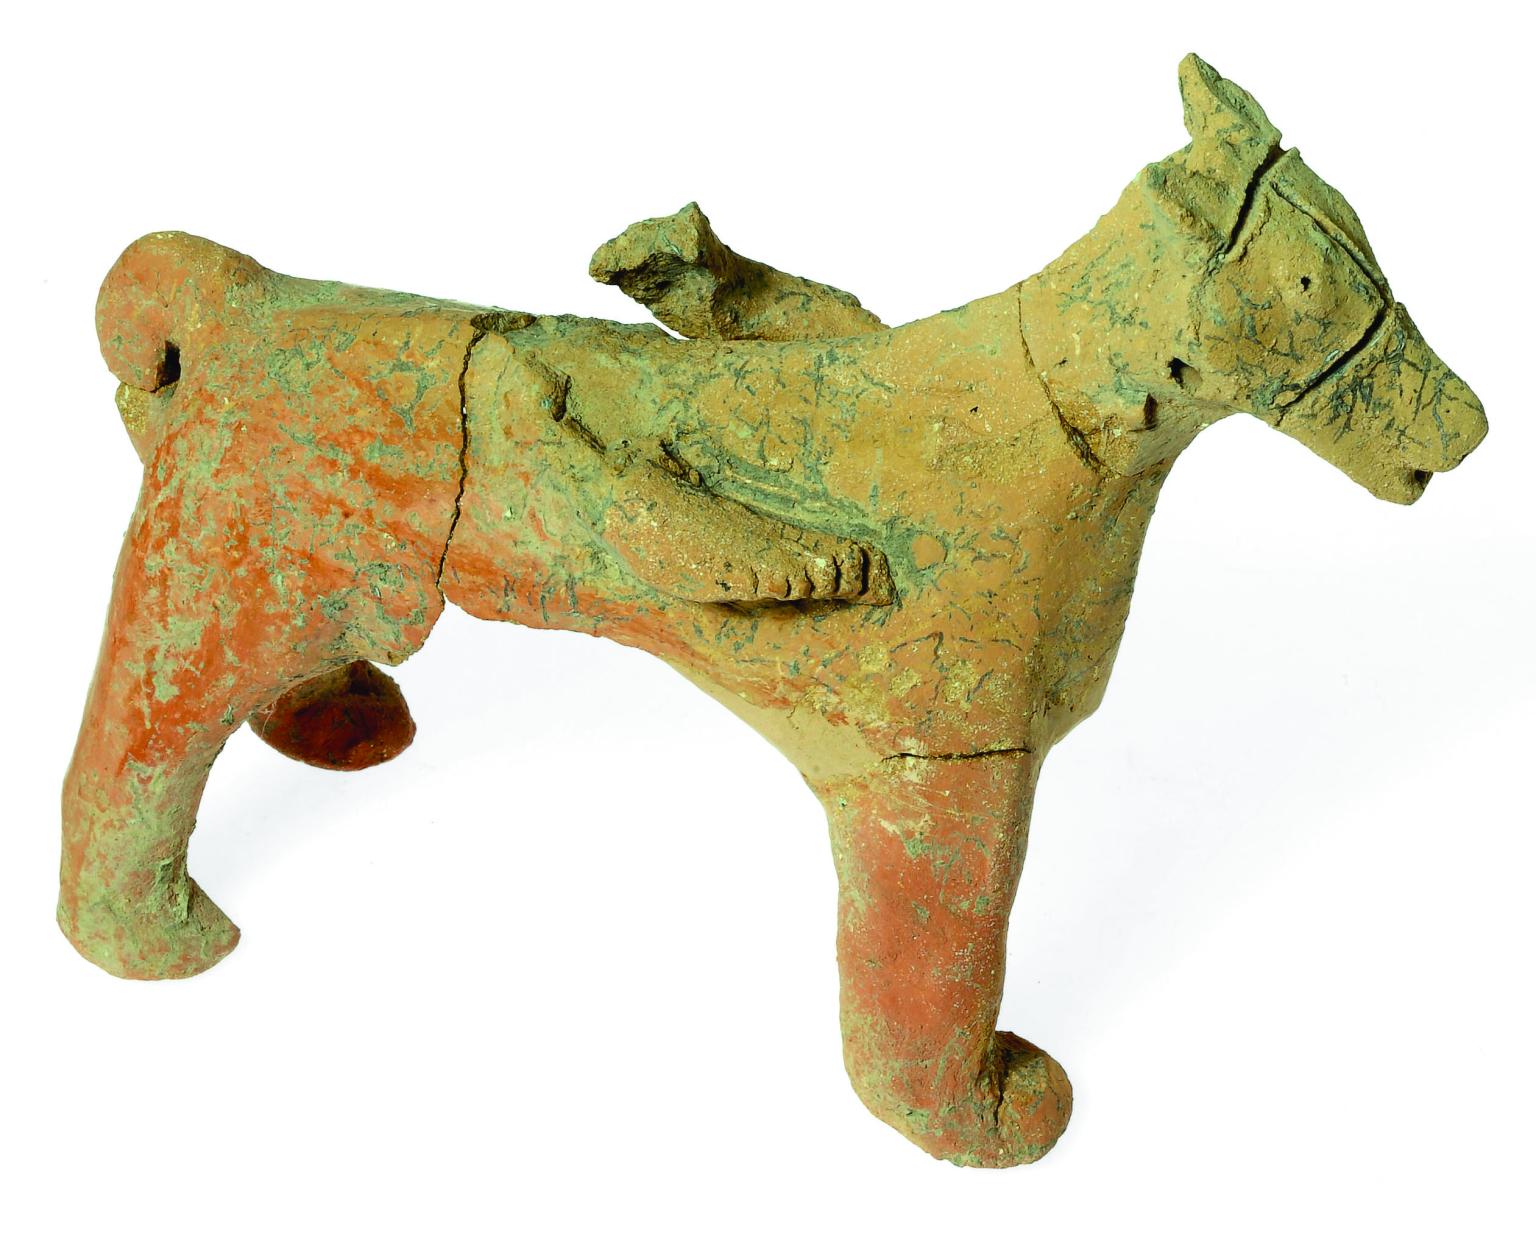 Terra-cotta figurine of horse.